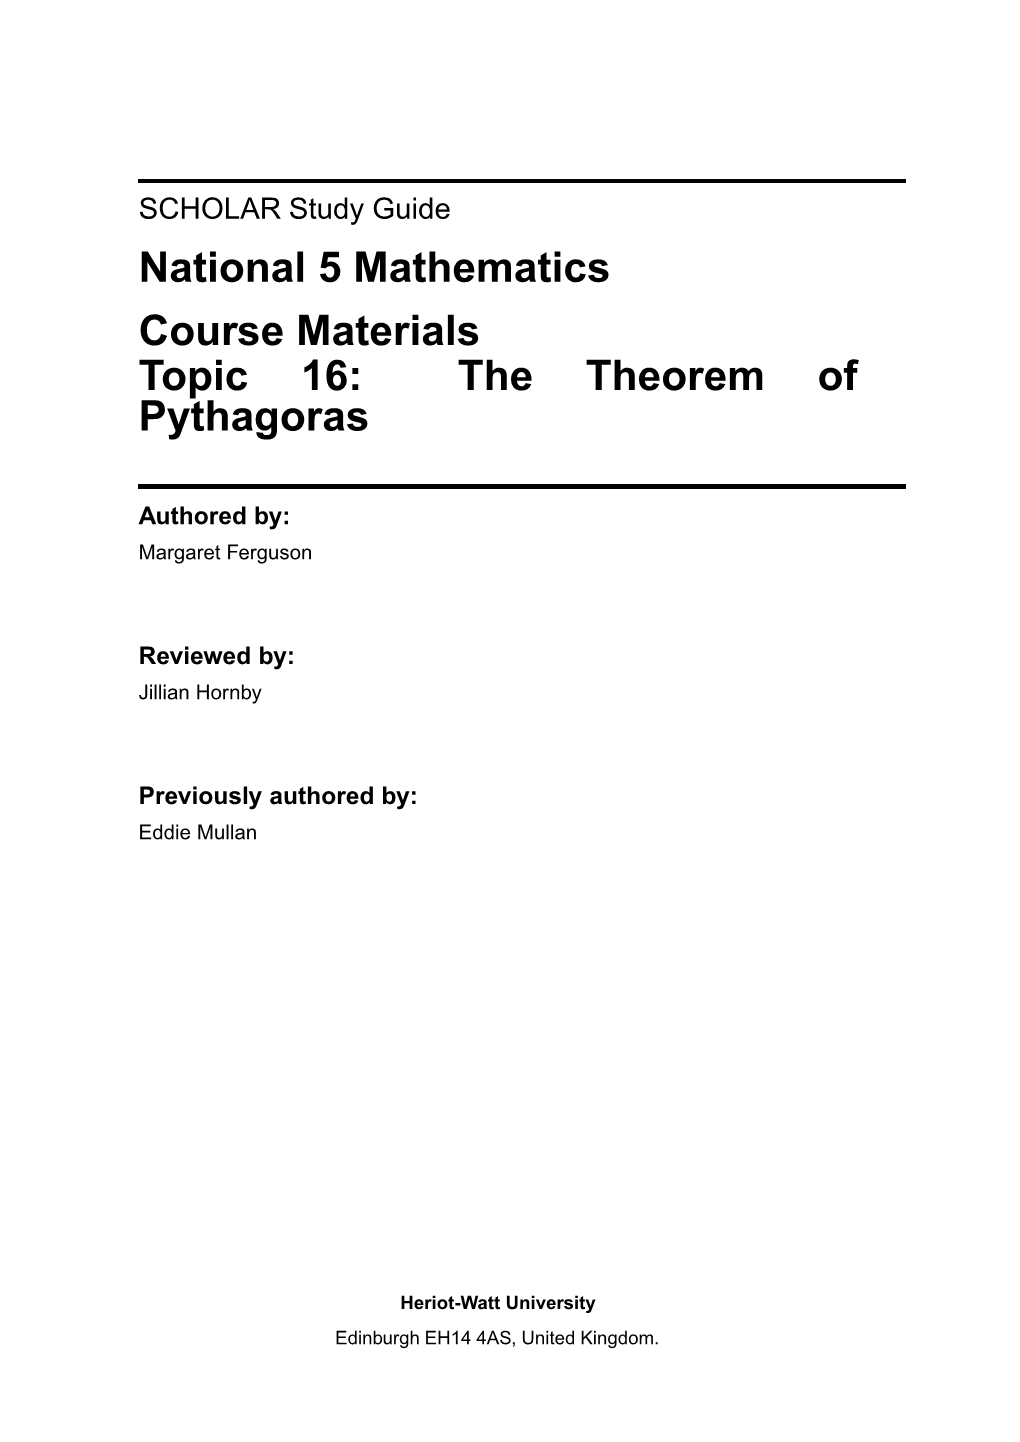 National 5 Mathematics Course Materials Topic 16: the Theorem of Pythagoras